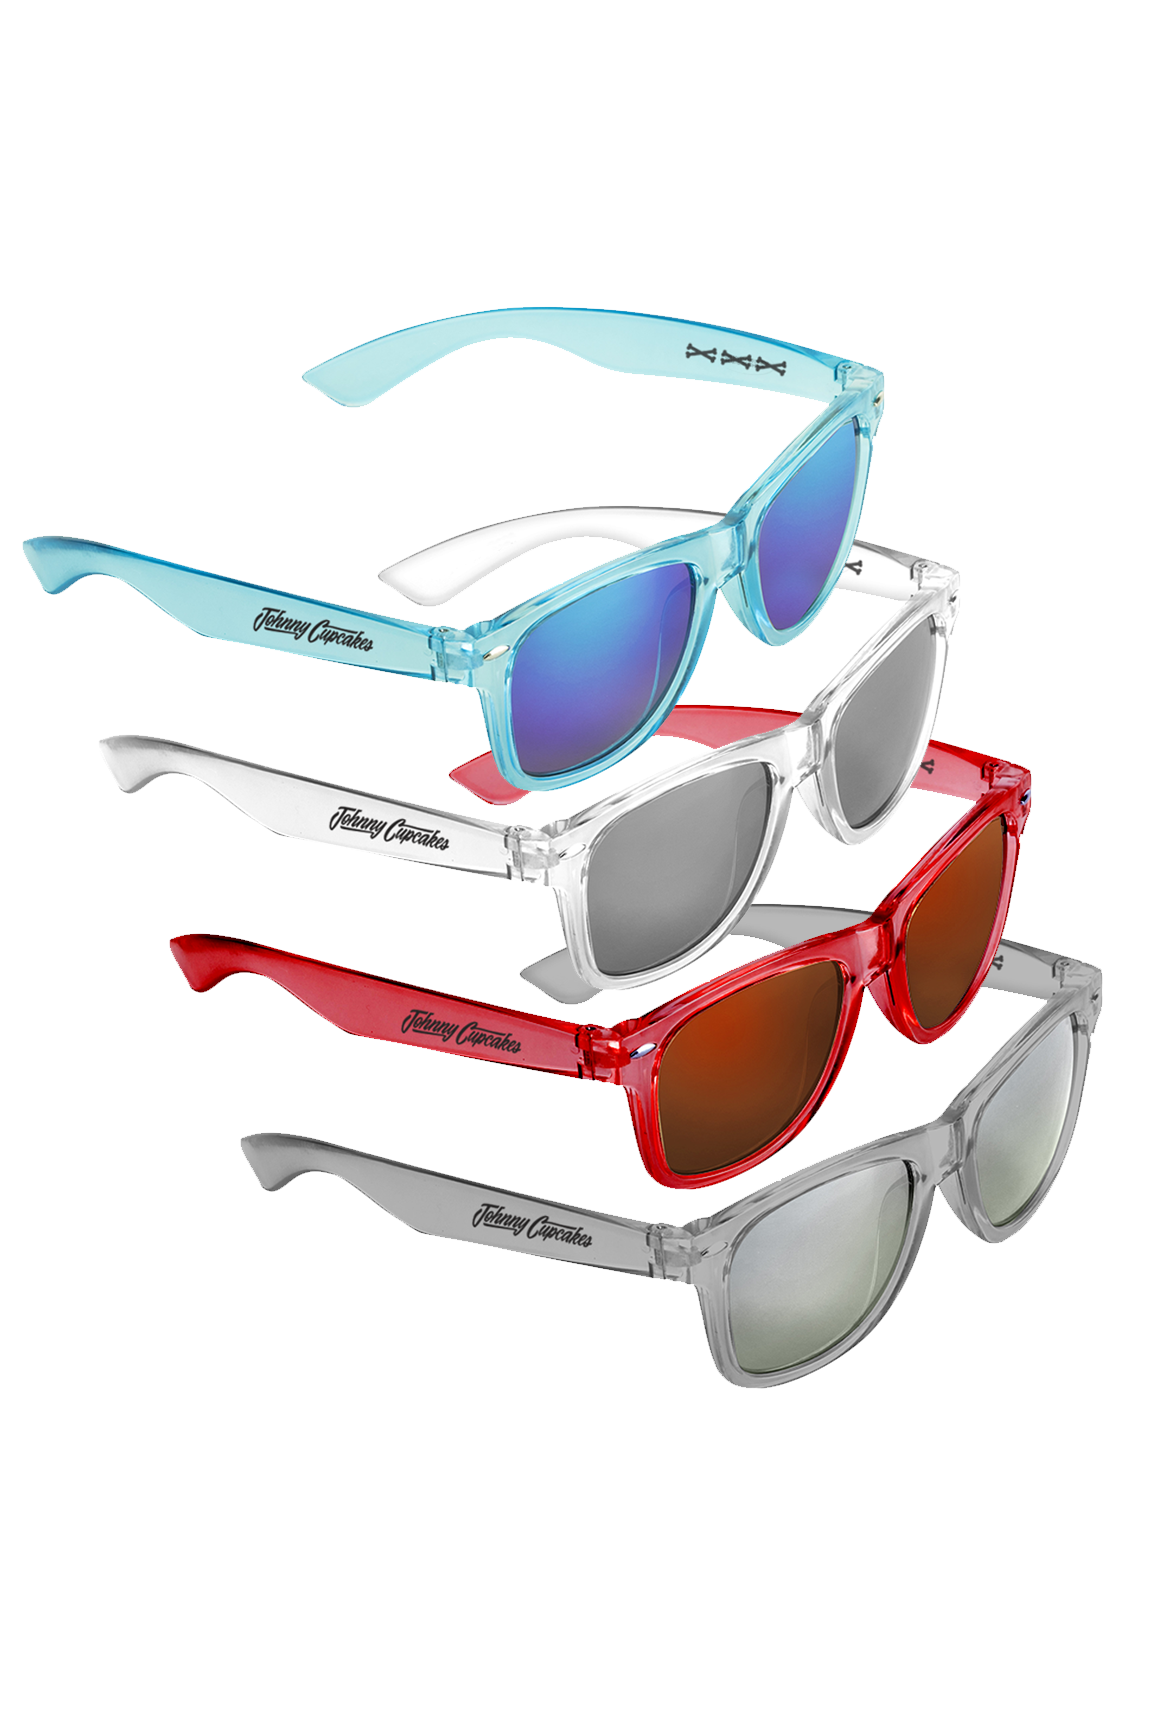 JC Script Mirrored Sunglasses Limited Bundle Deal - all 4 colors!